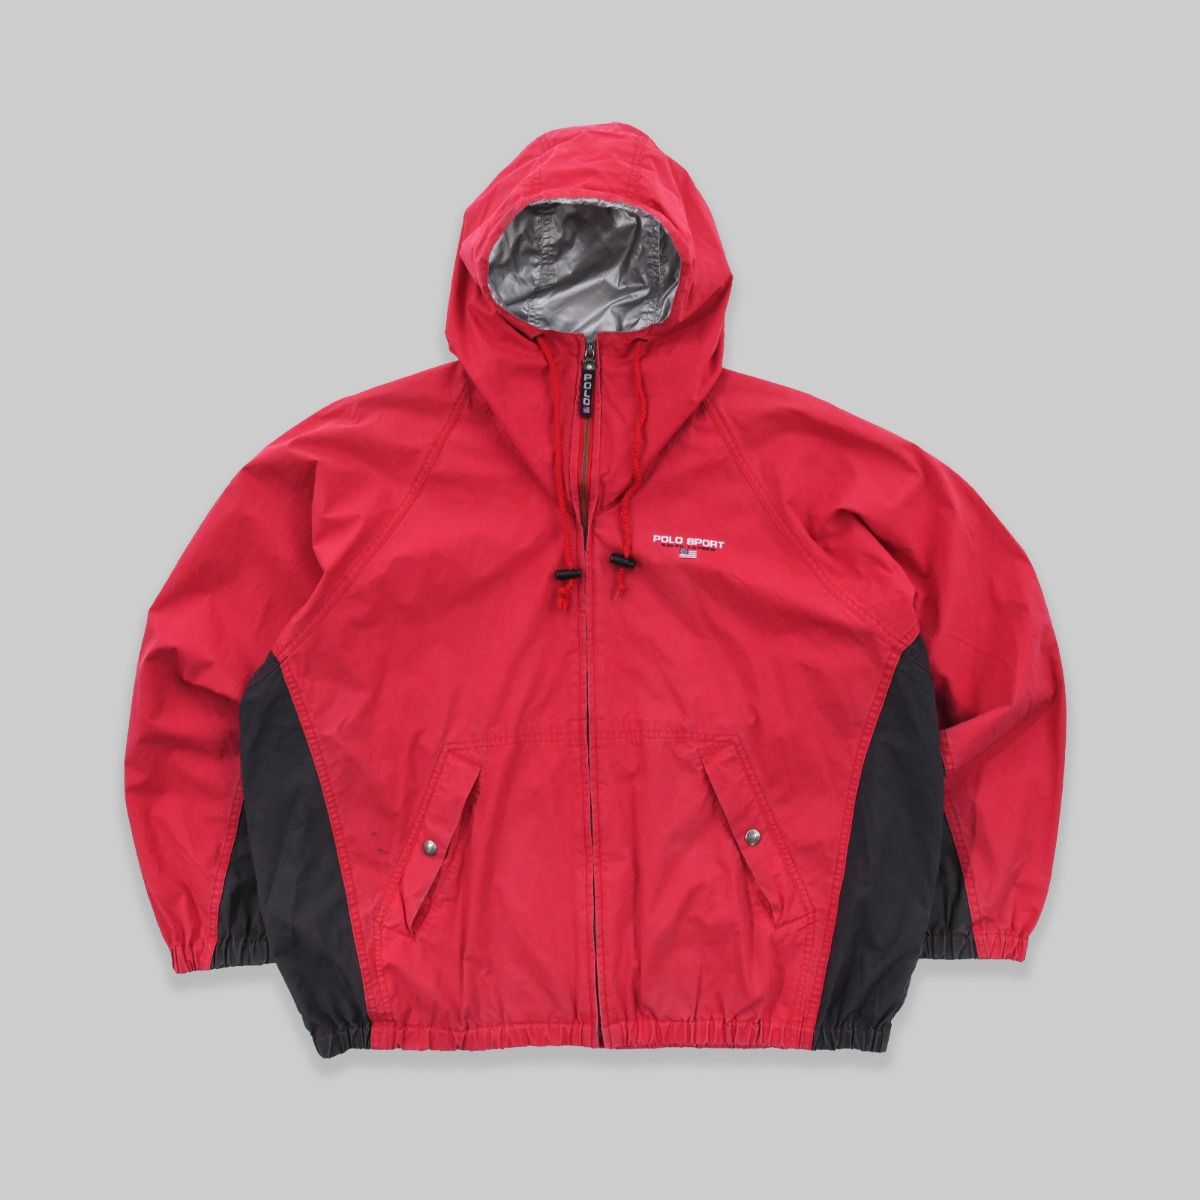 Ralph Lauren Polo Sport Red Jacket